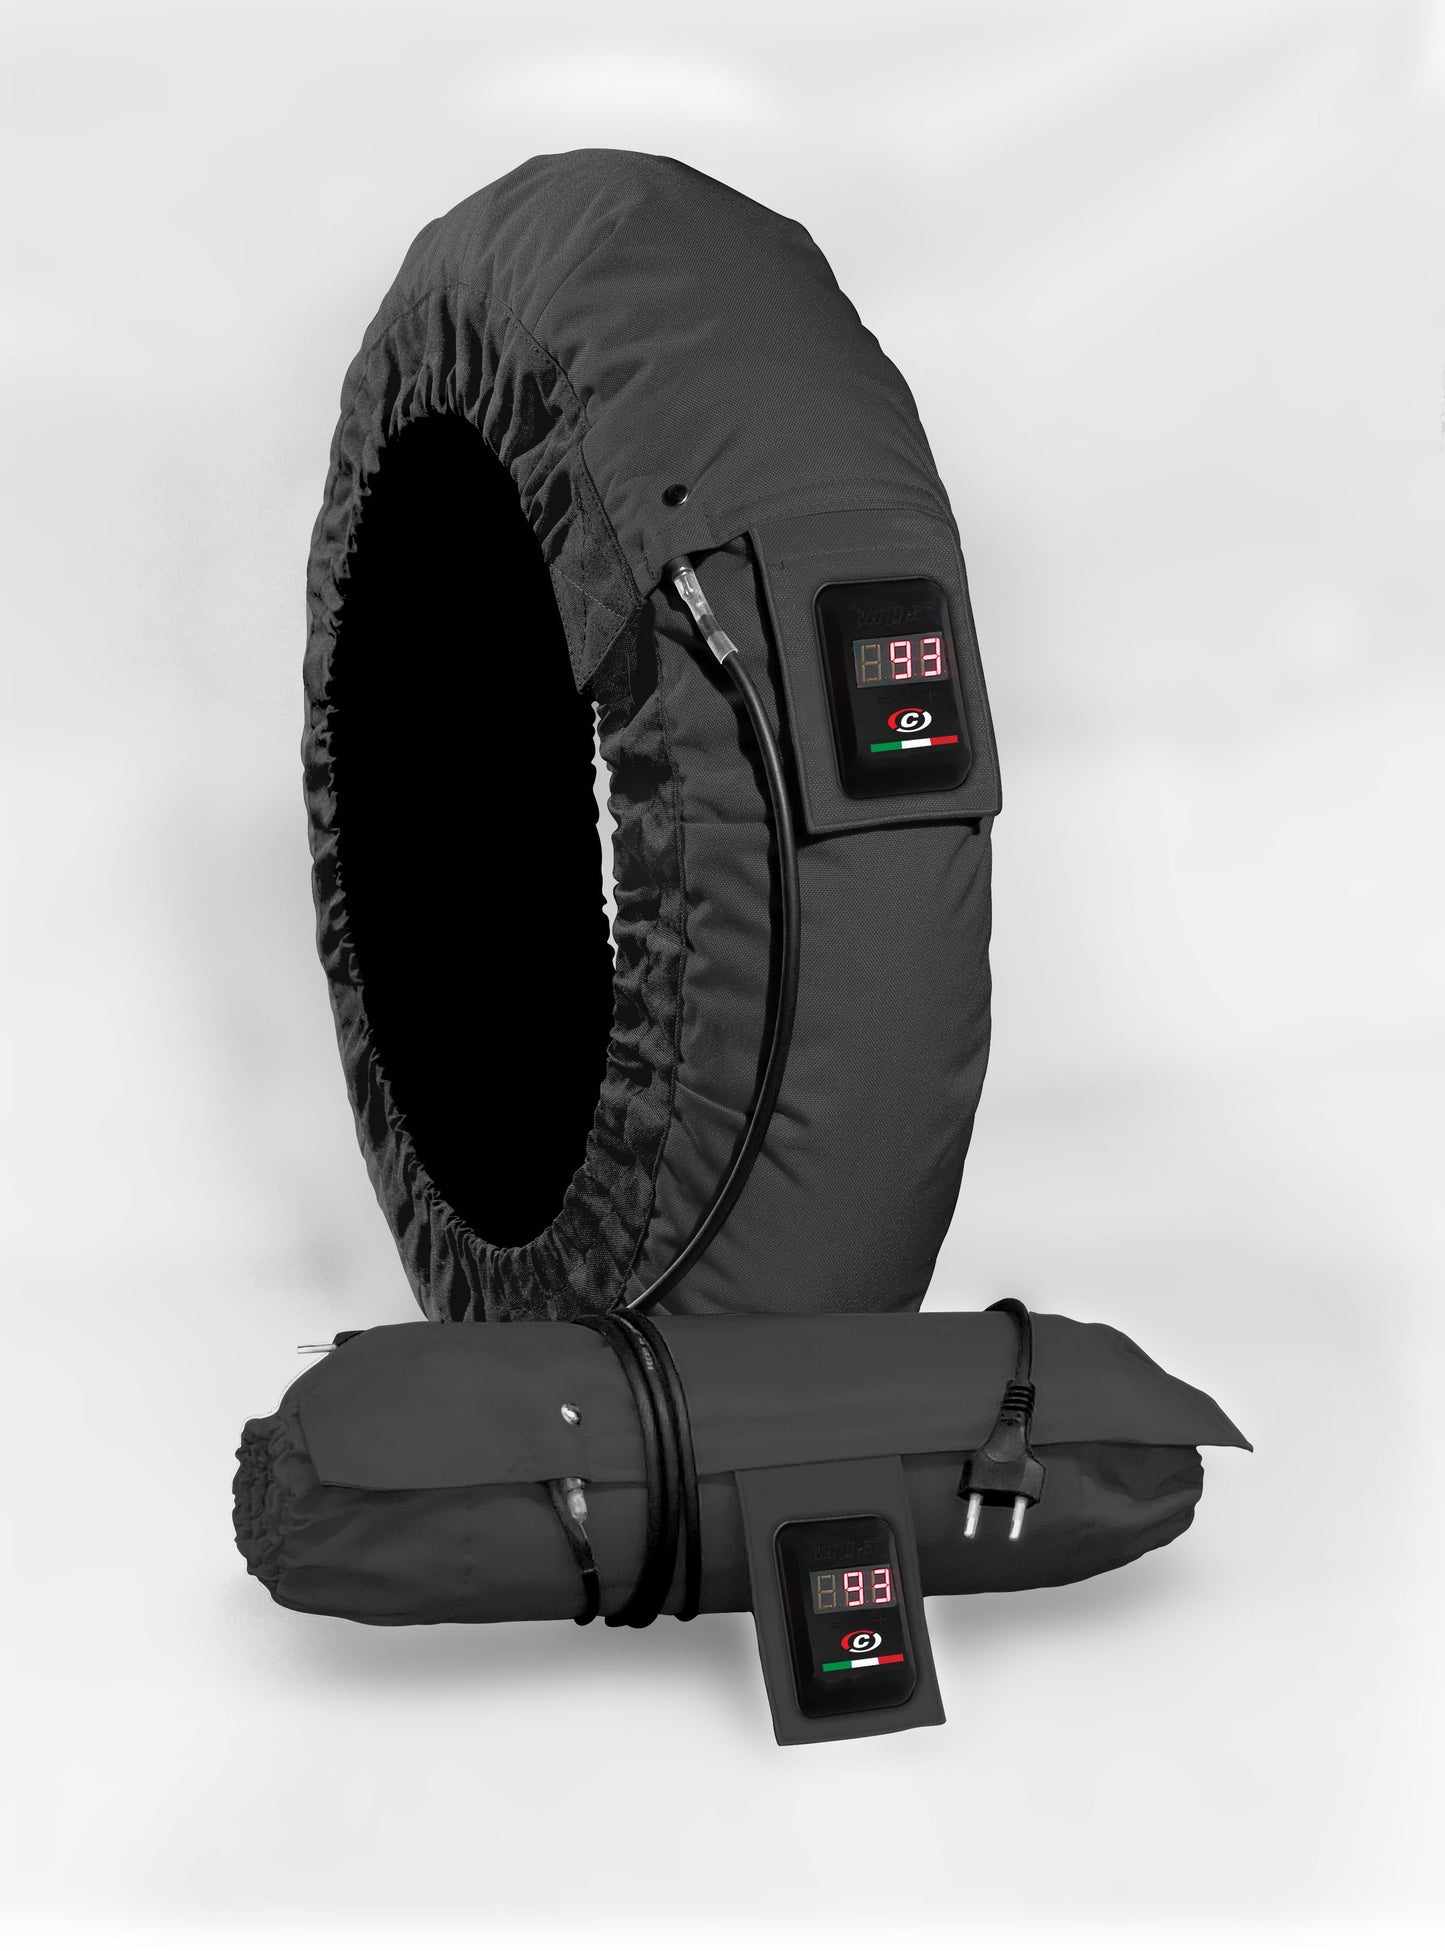 Superbike tire heater supreme vision m/xxl black